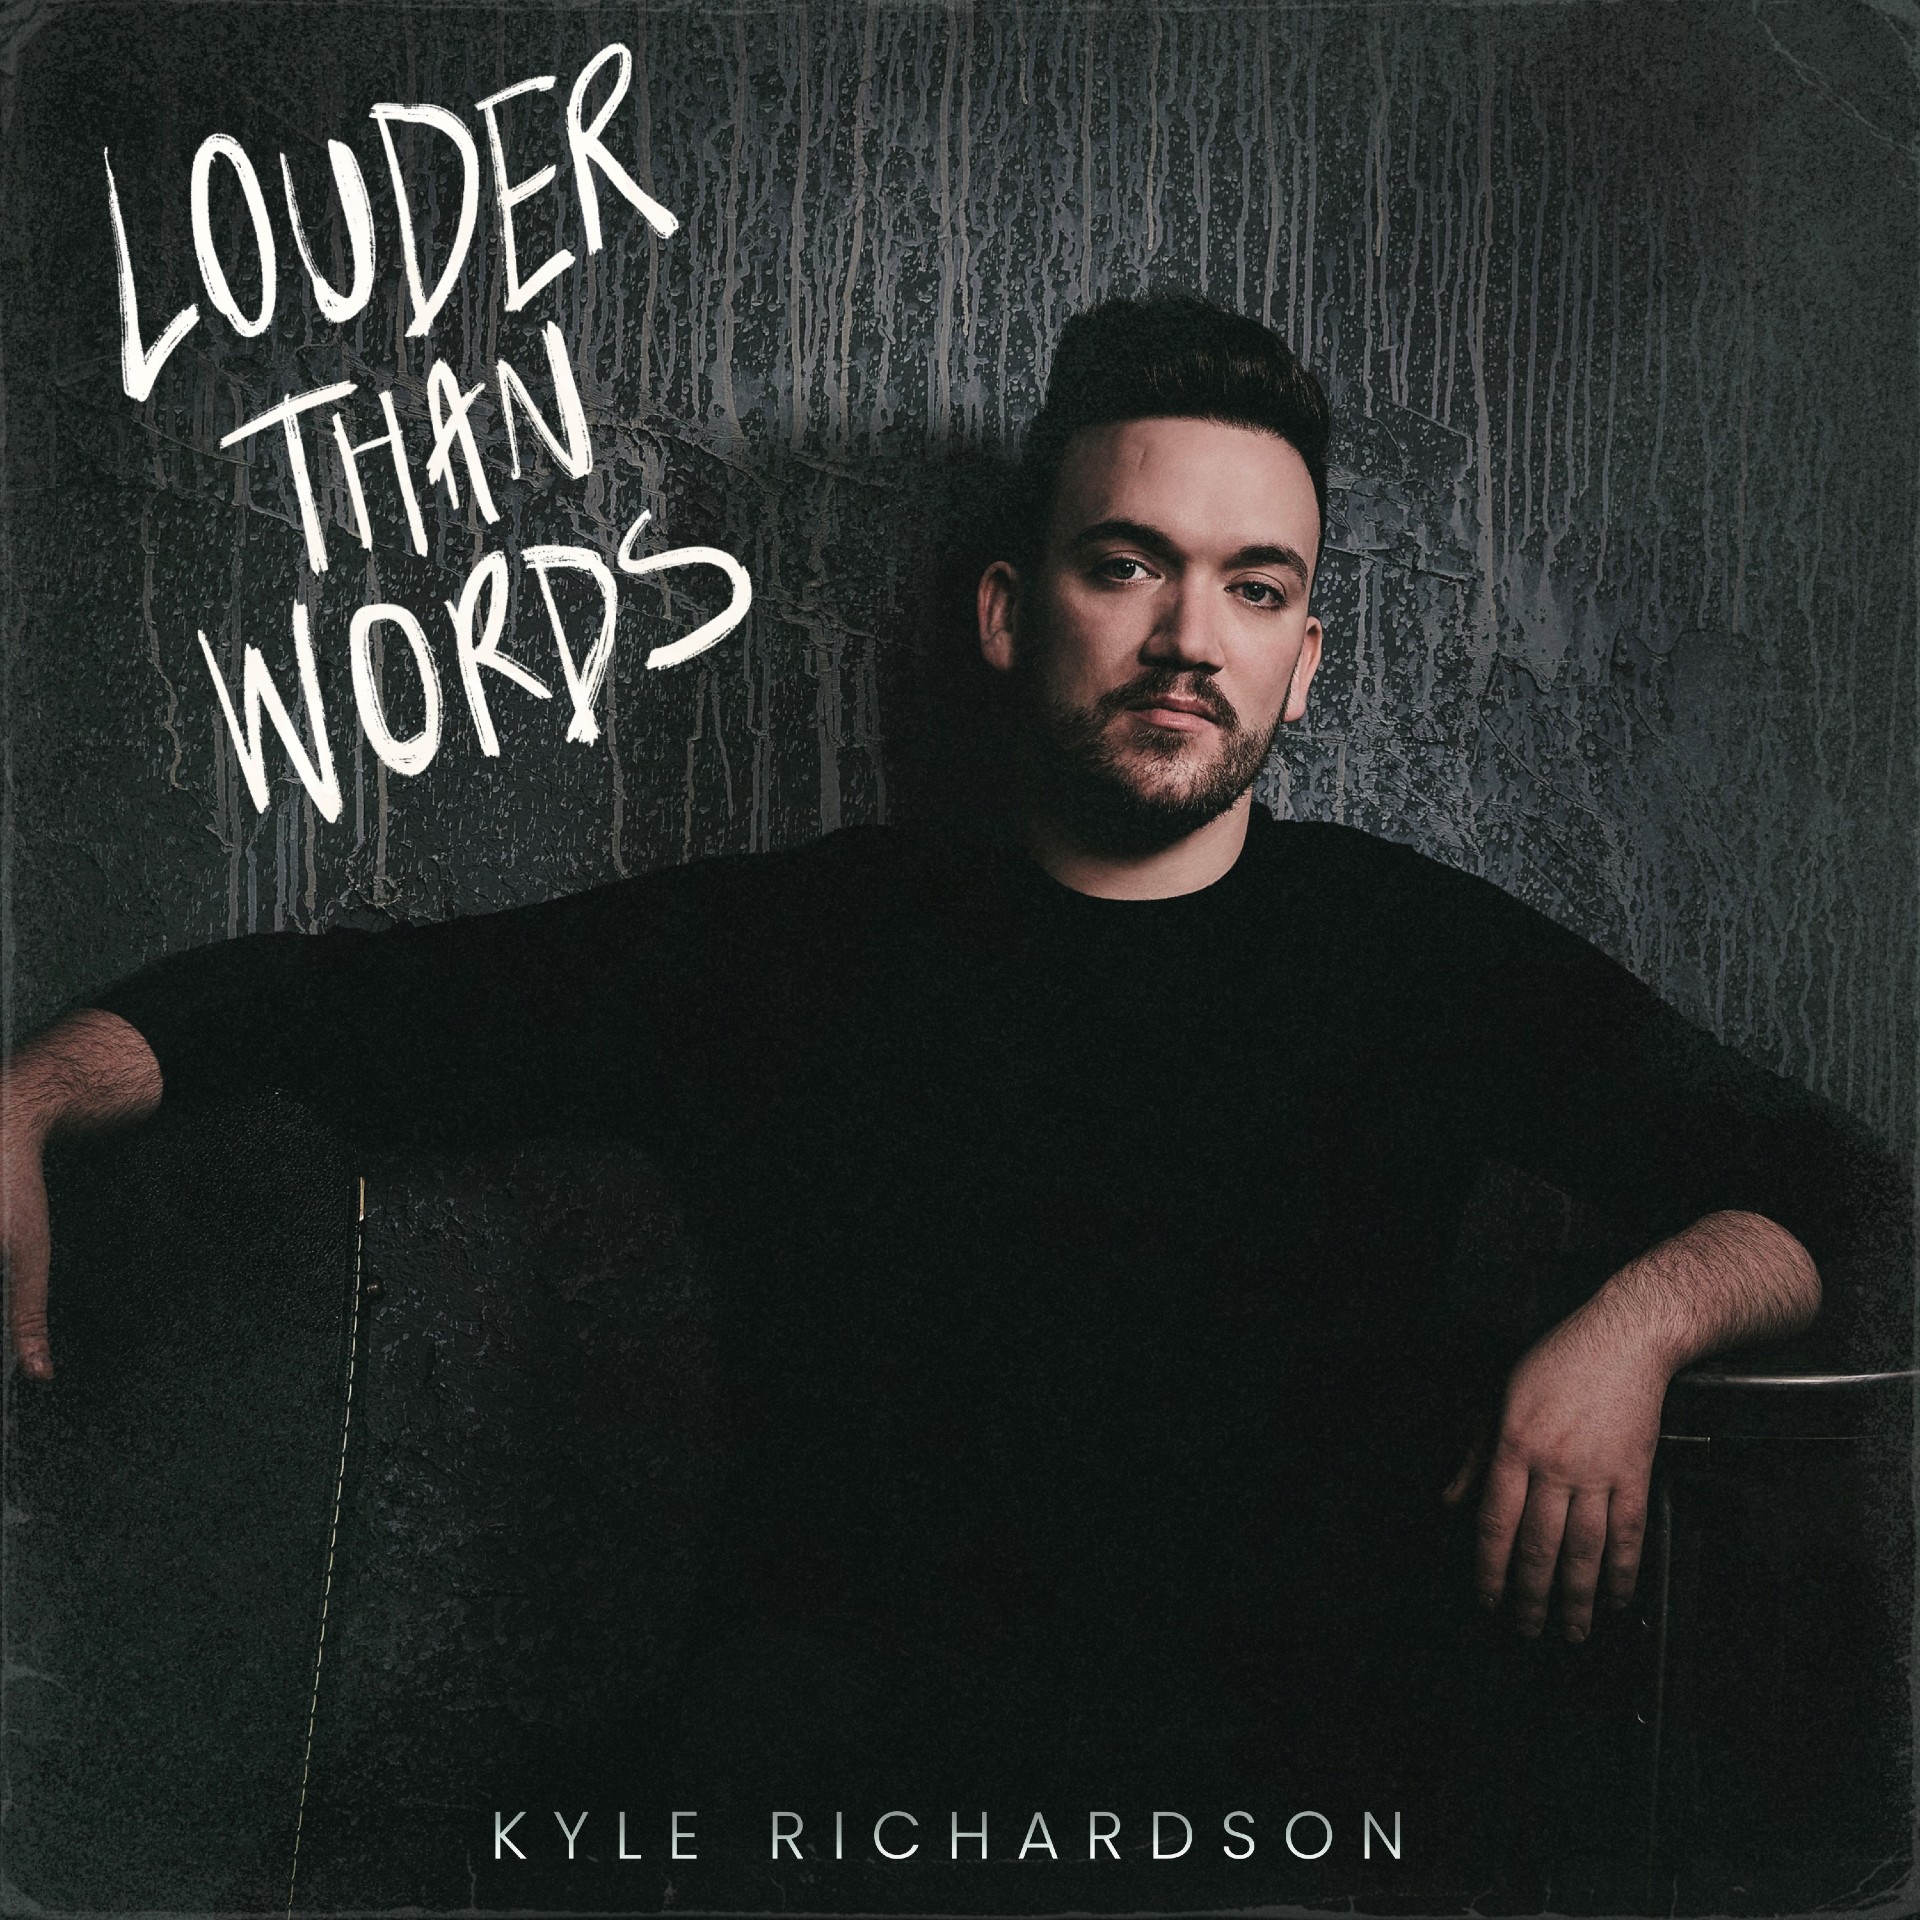 Kyle Richardson ‘Louder Than Words’ album artwork